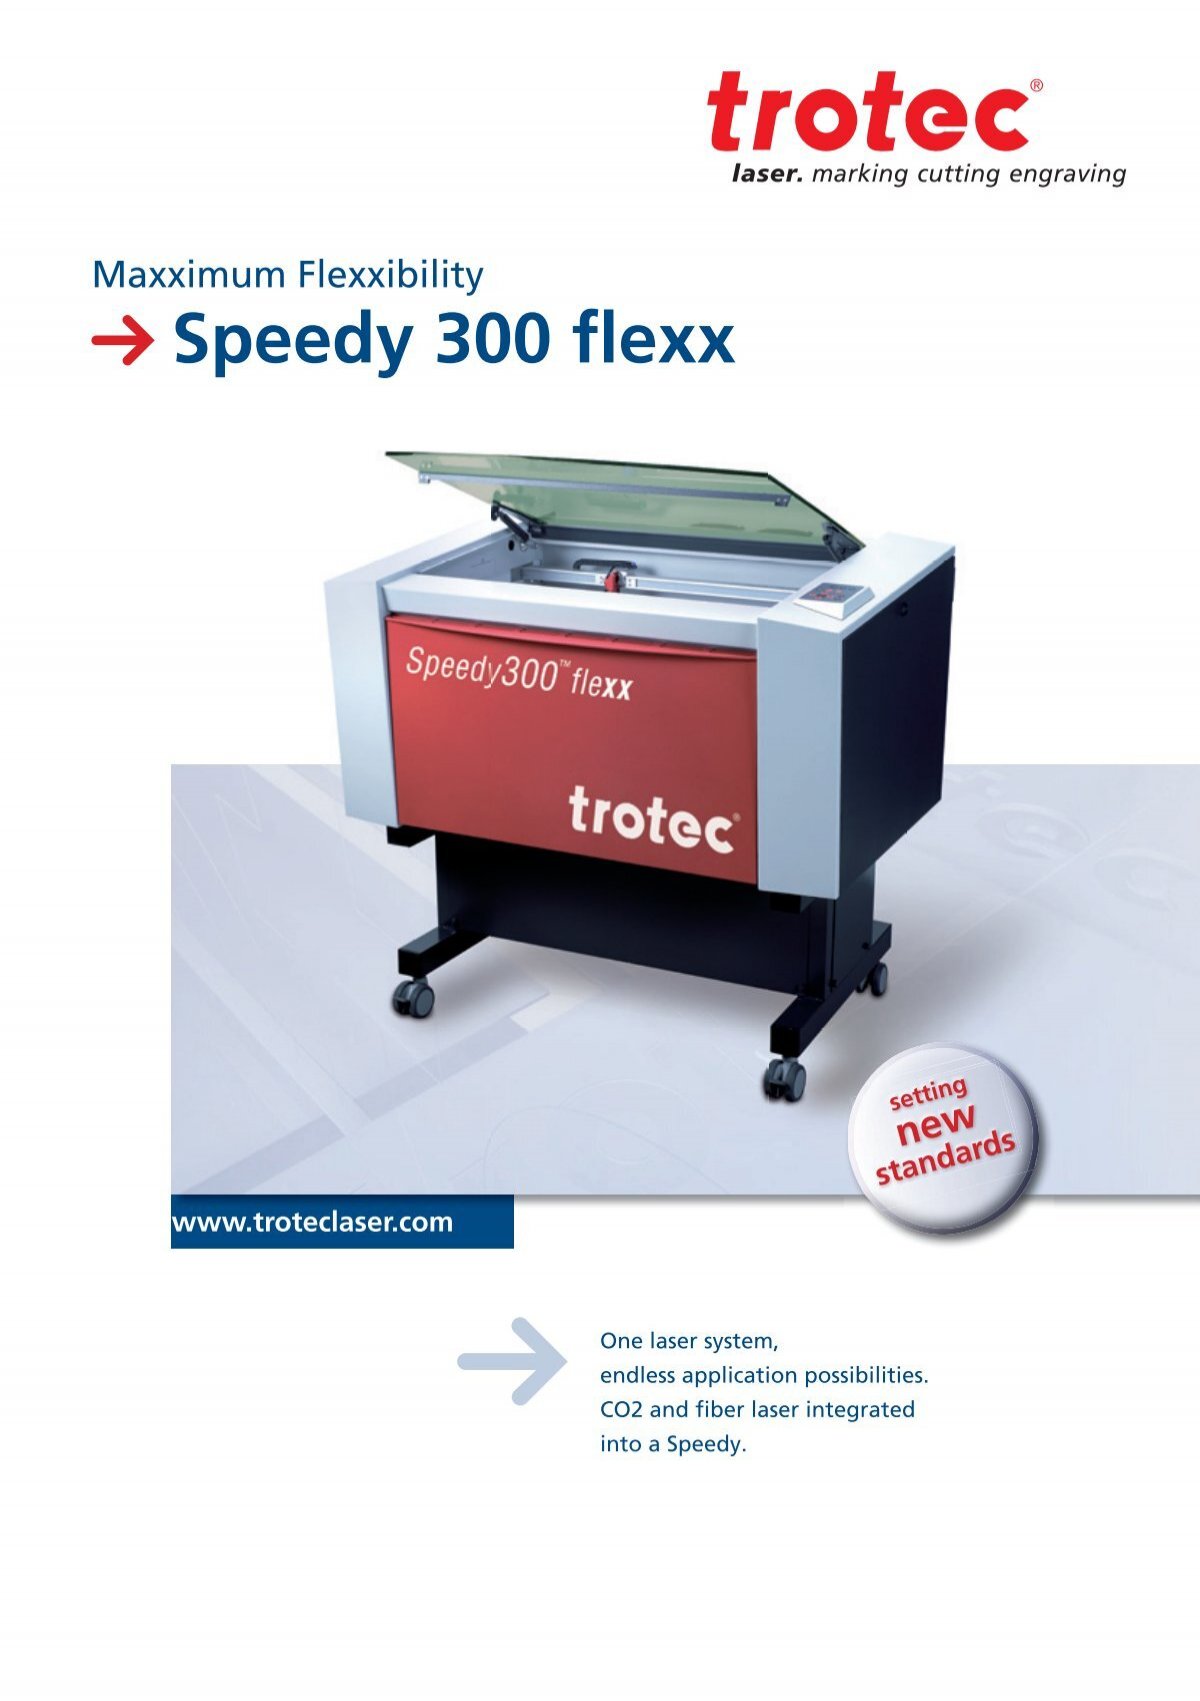 new standards Speedy 300 flexx - Trotec Laser